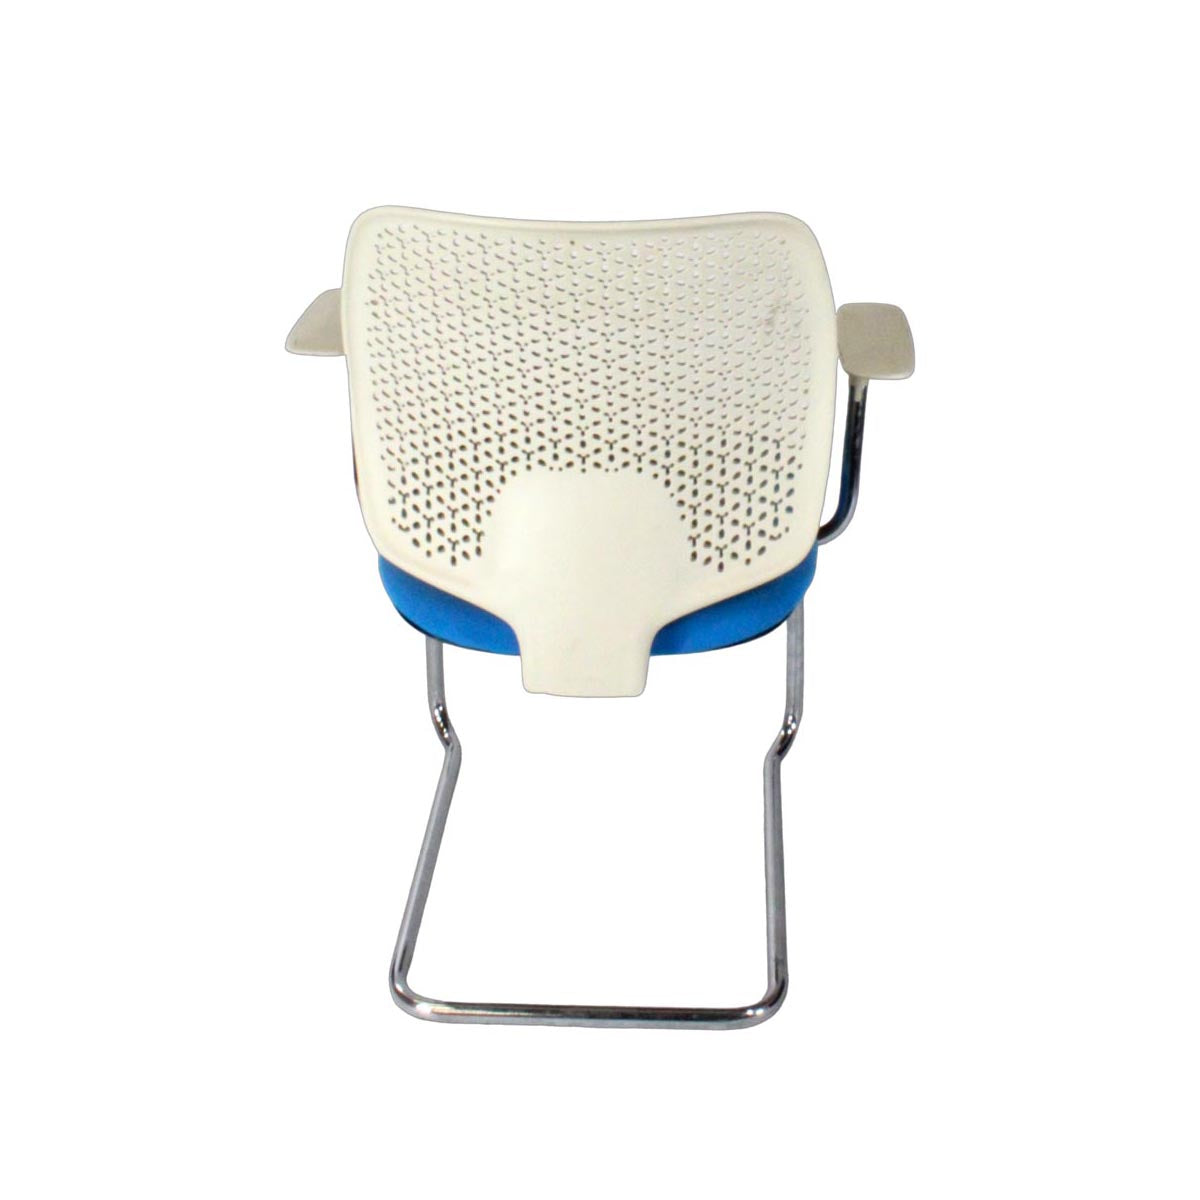 Orangebox: Ara Task Chair in White/Blue - Refurbished